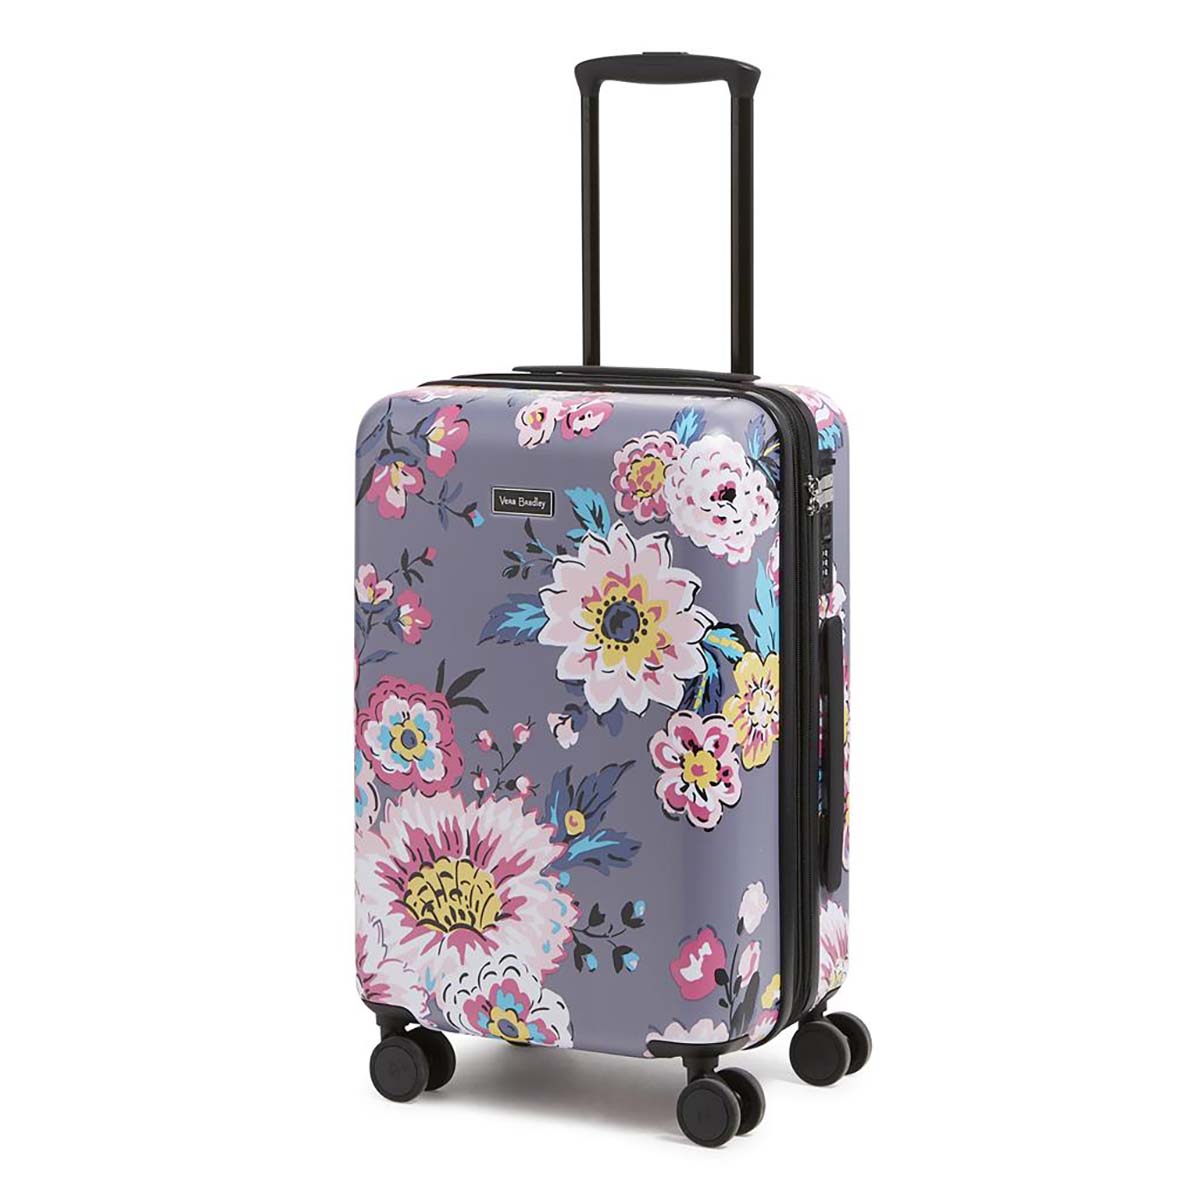 Vera Bradley Hardside Small Spinner Luggage - Parisian Bouquet